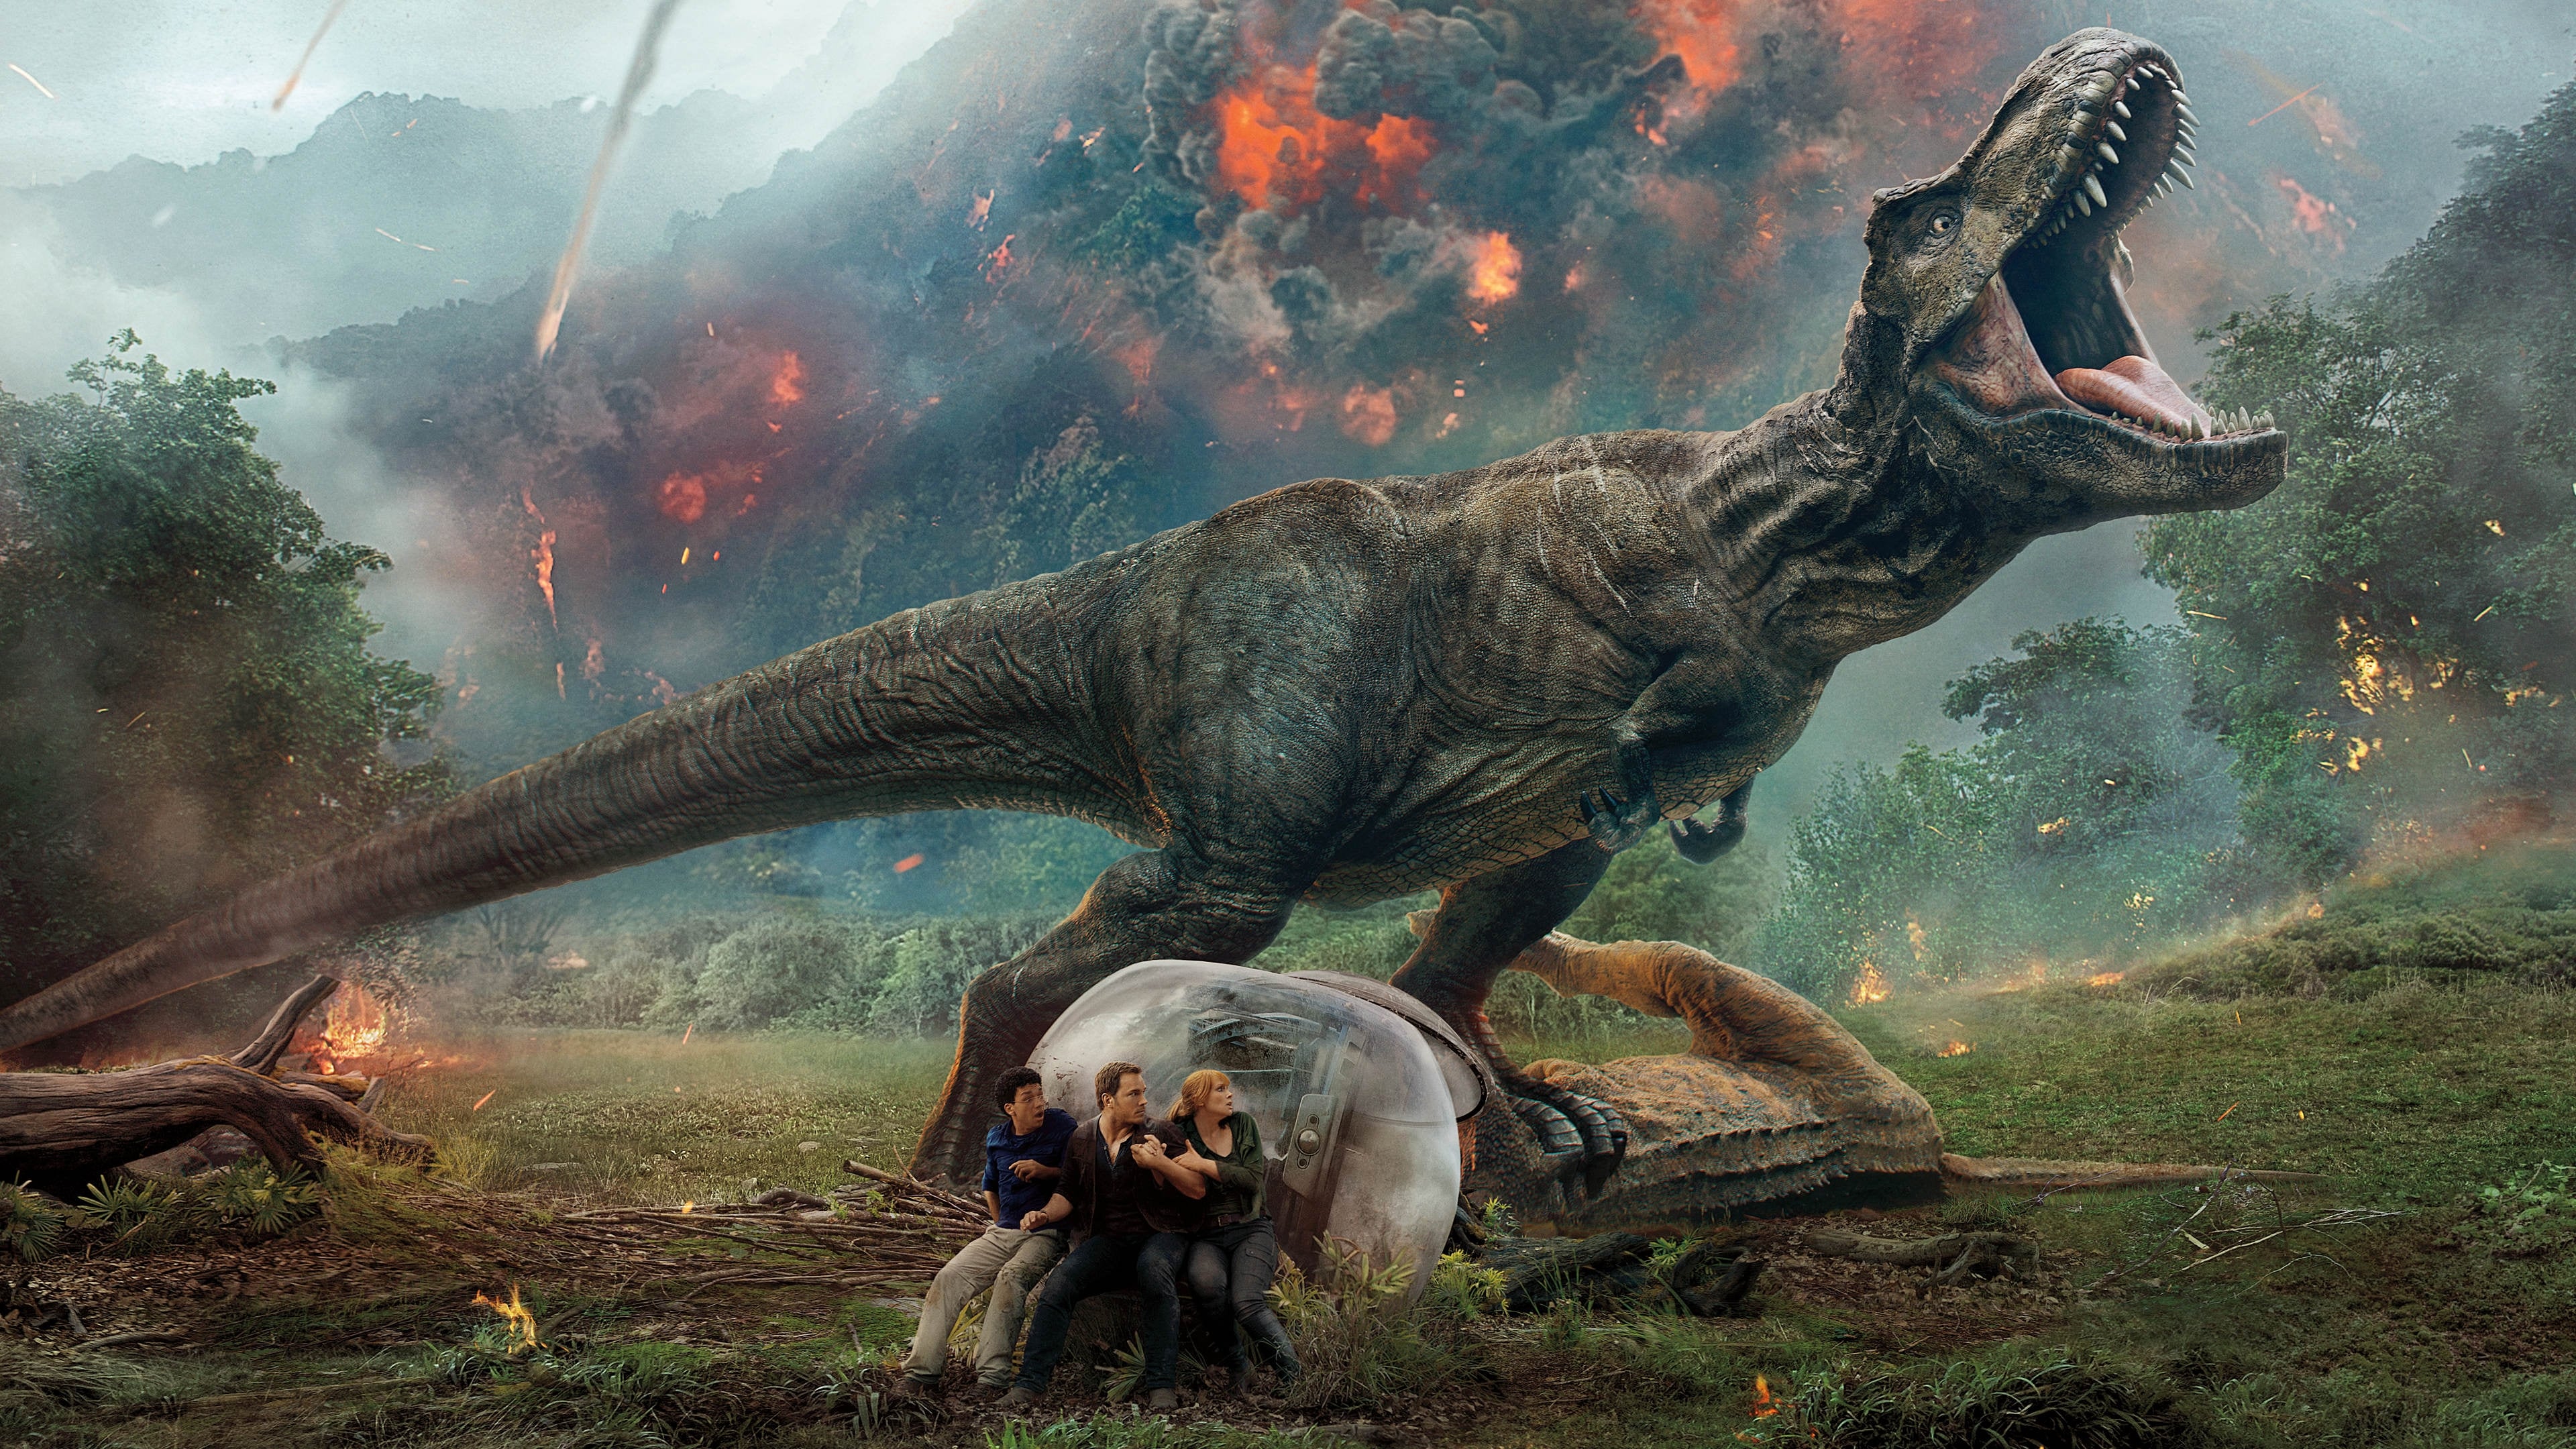 Image du film Jurassic World : Fallen Kingdom 3s9o5af2xwkwr5jzp2ijzpzeqqgjpg